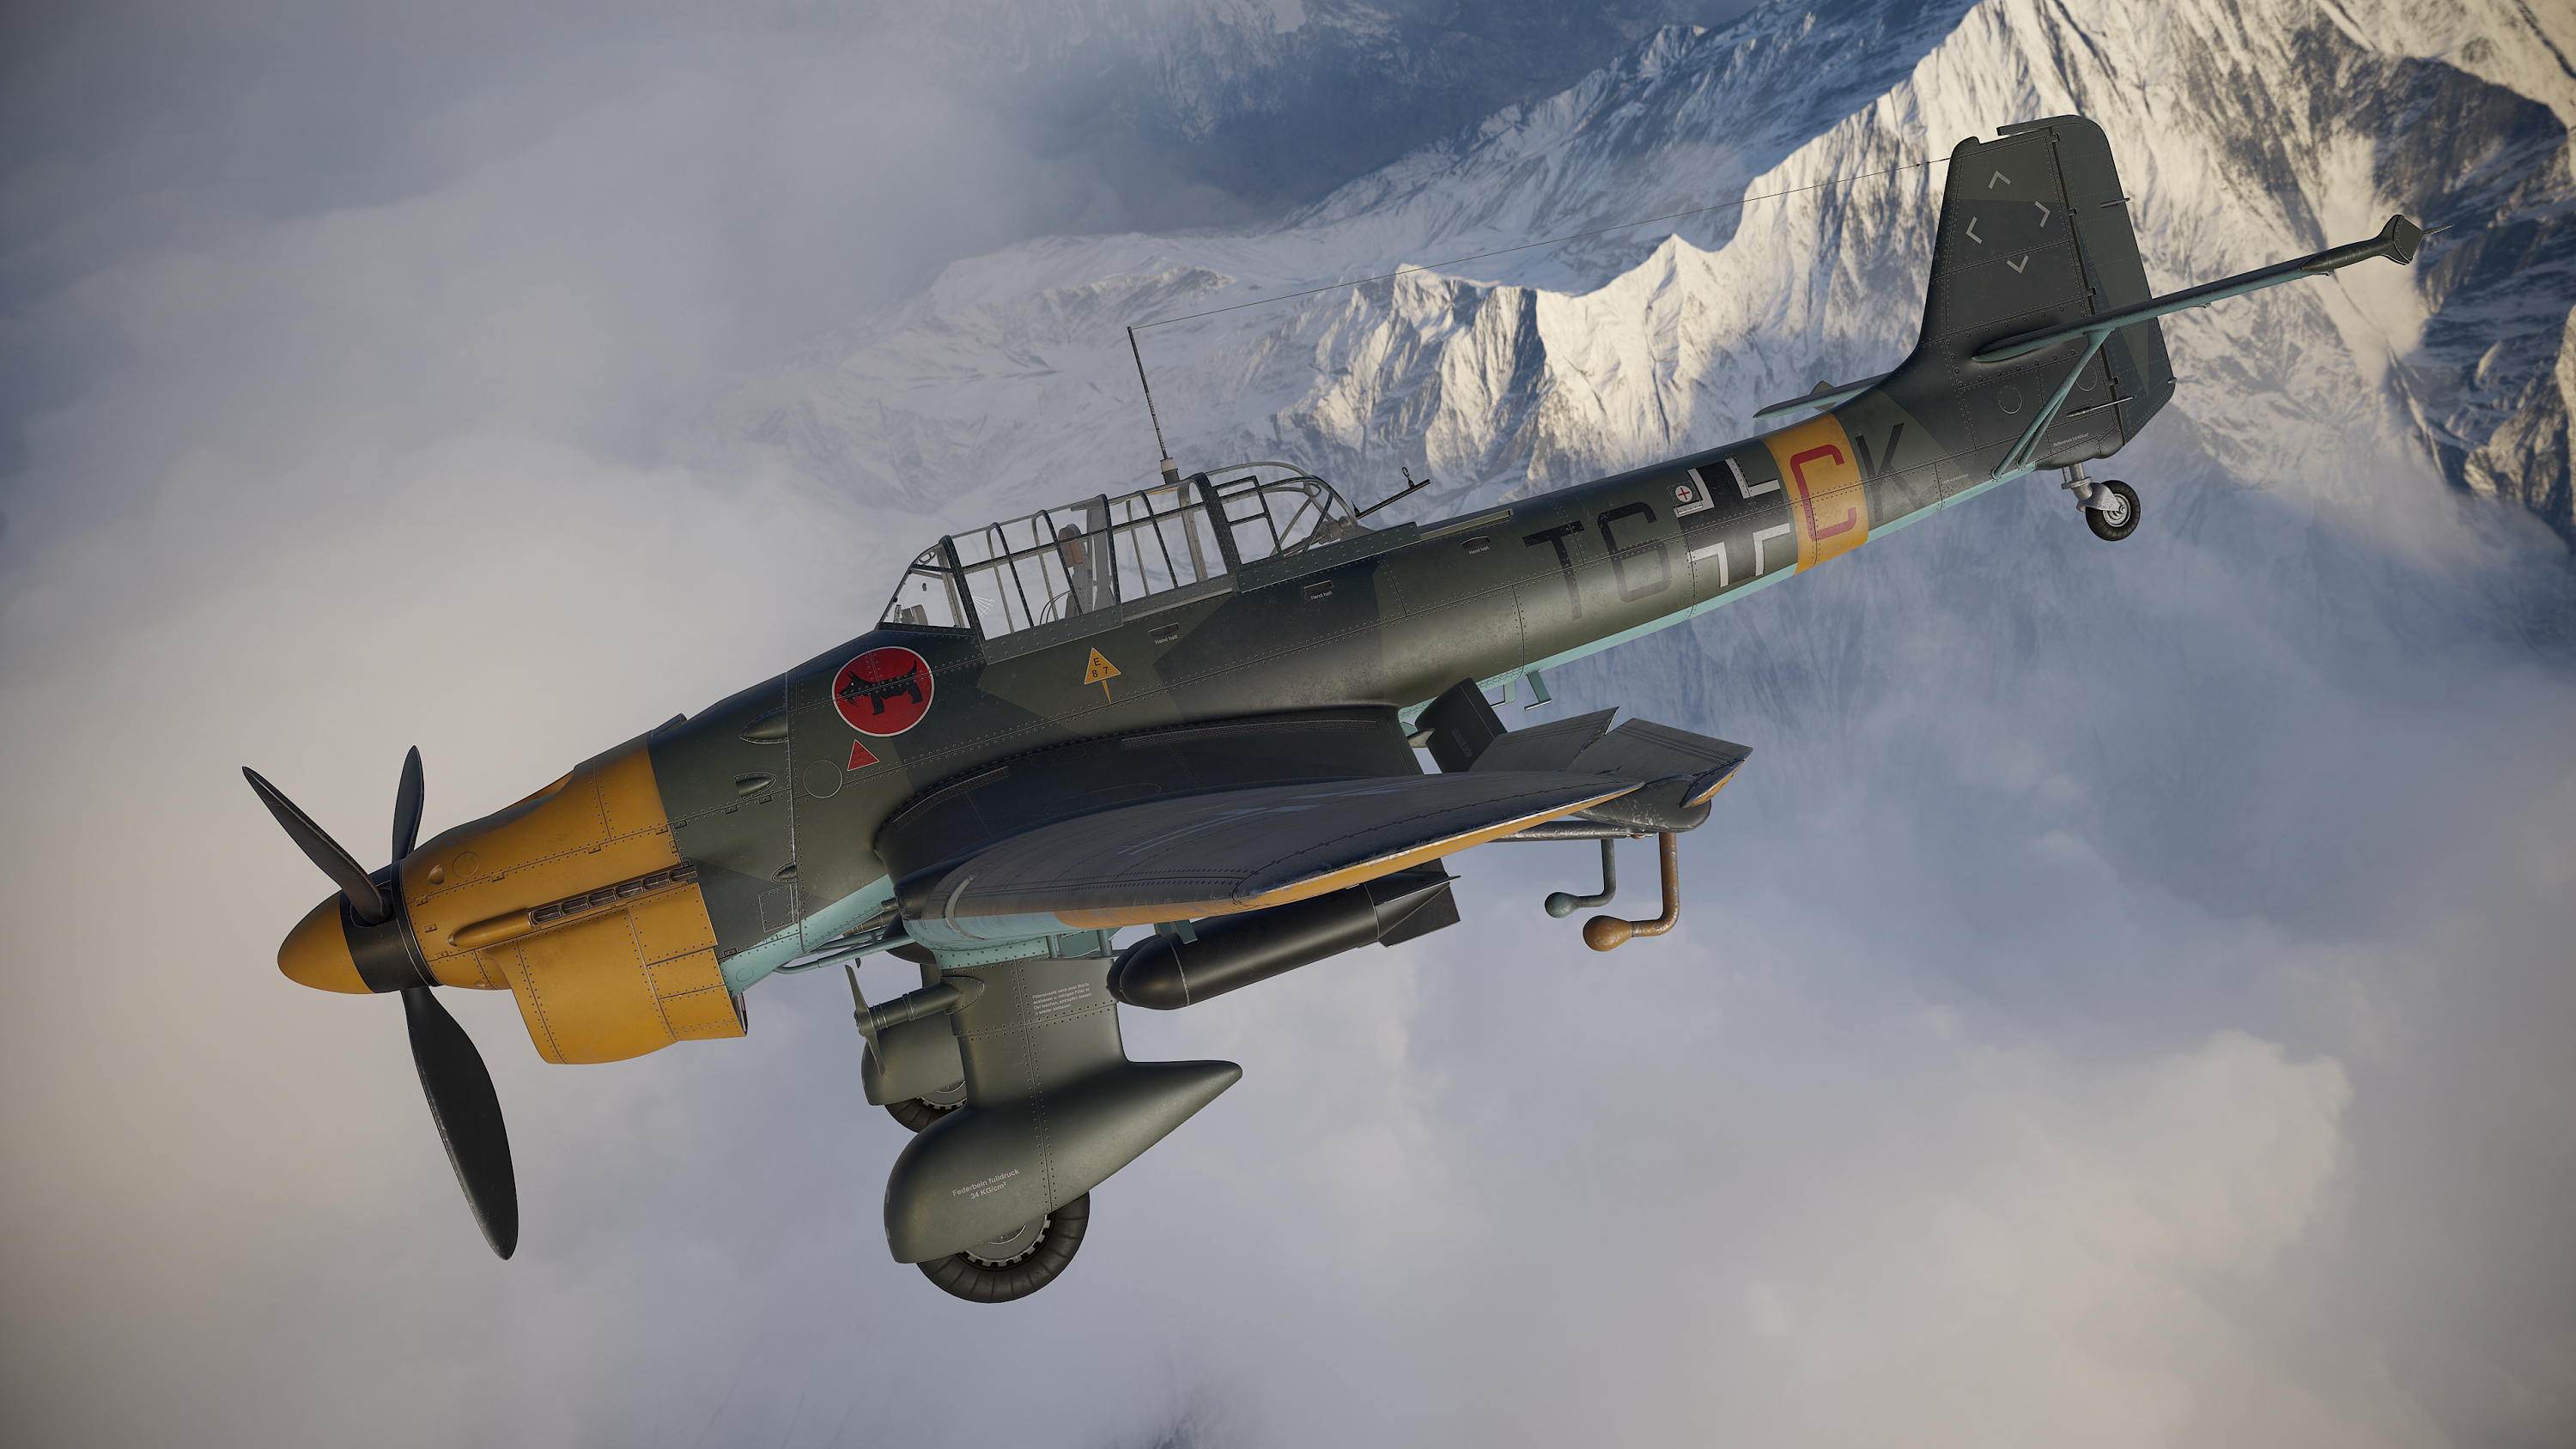 ju87 斯图卡b2型 俯冲轰炸机